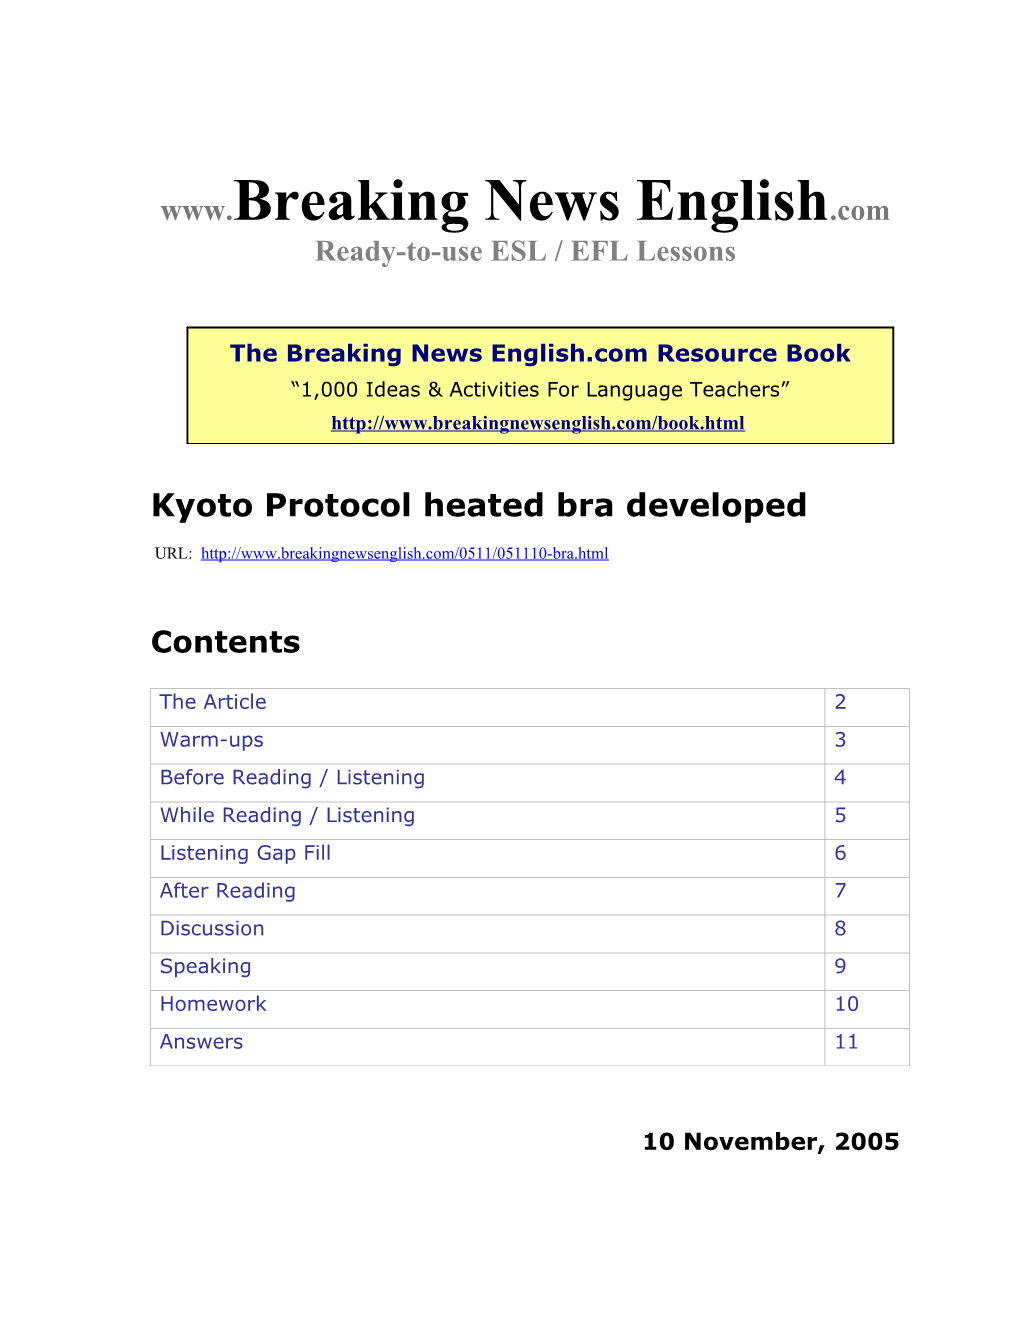 Kyoto Protocol Heated Bra Developed